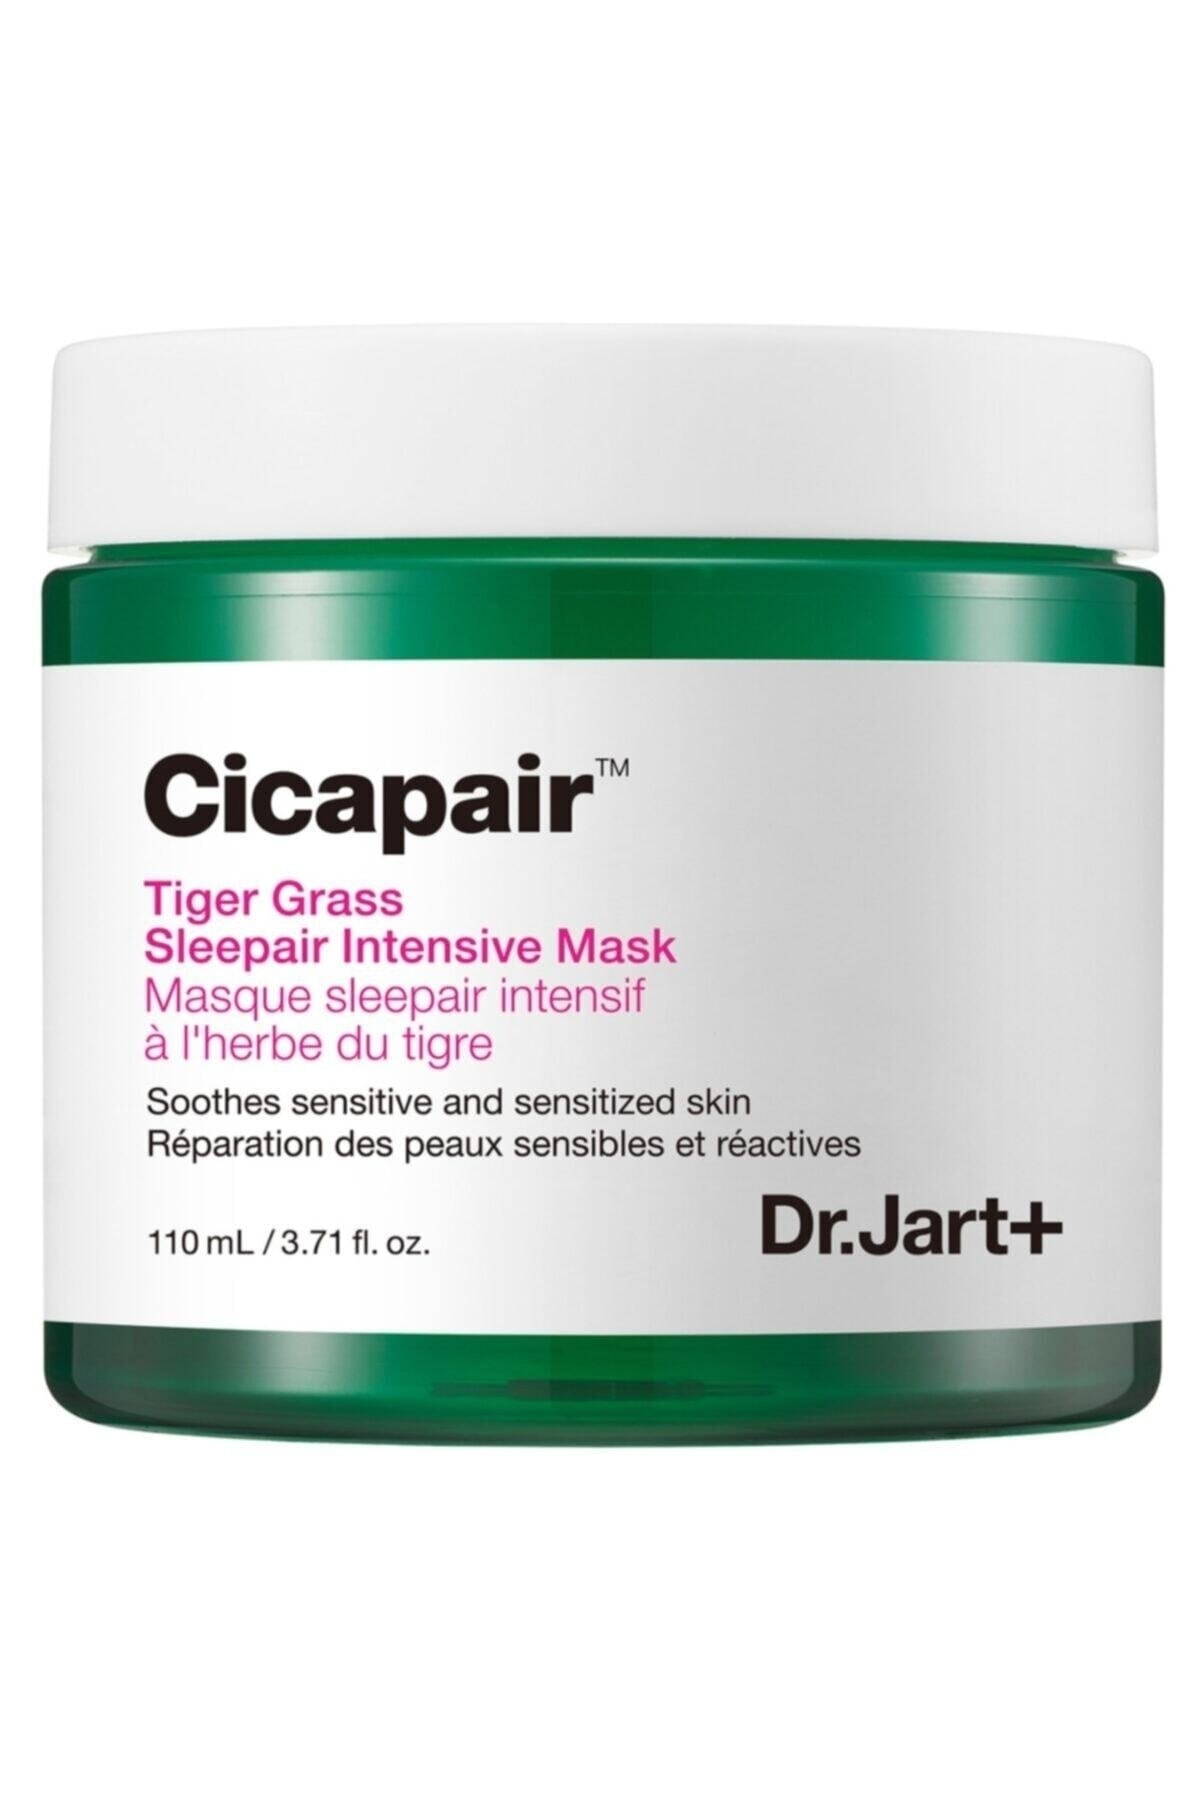 Dr. Jart+ Dr.jart+ Cicapair Tiger Grass Sleepair Intensive Mask Onarıcı Maske 110 Ml Shopping